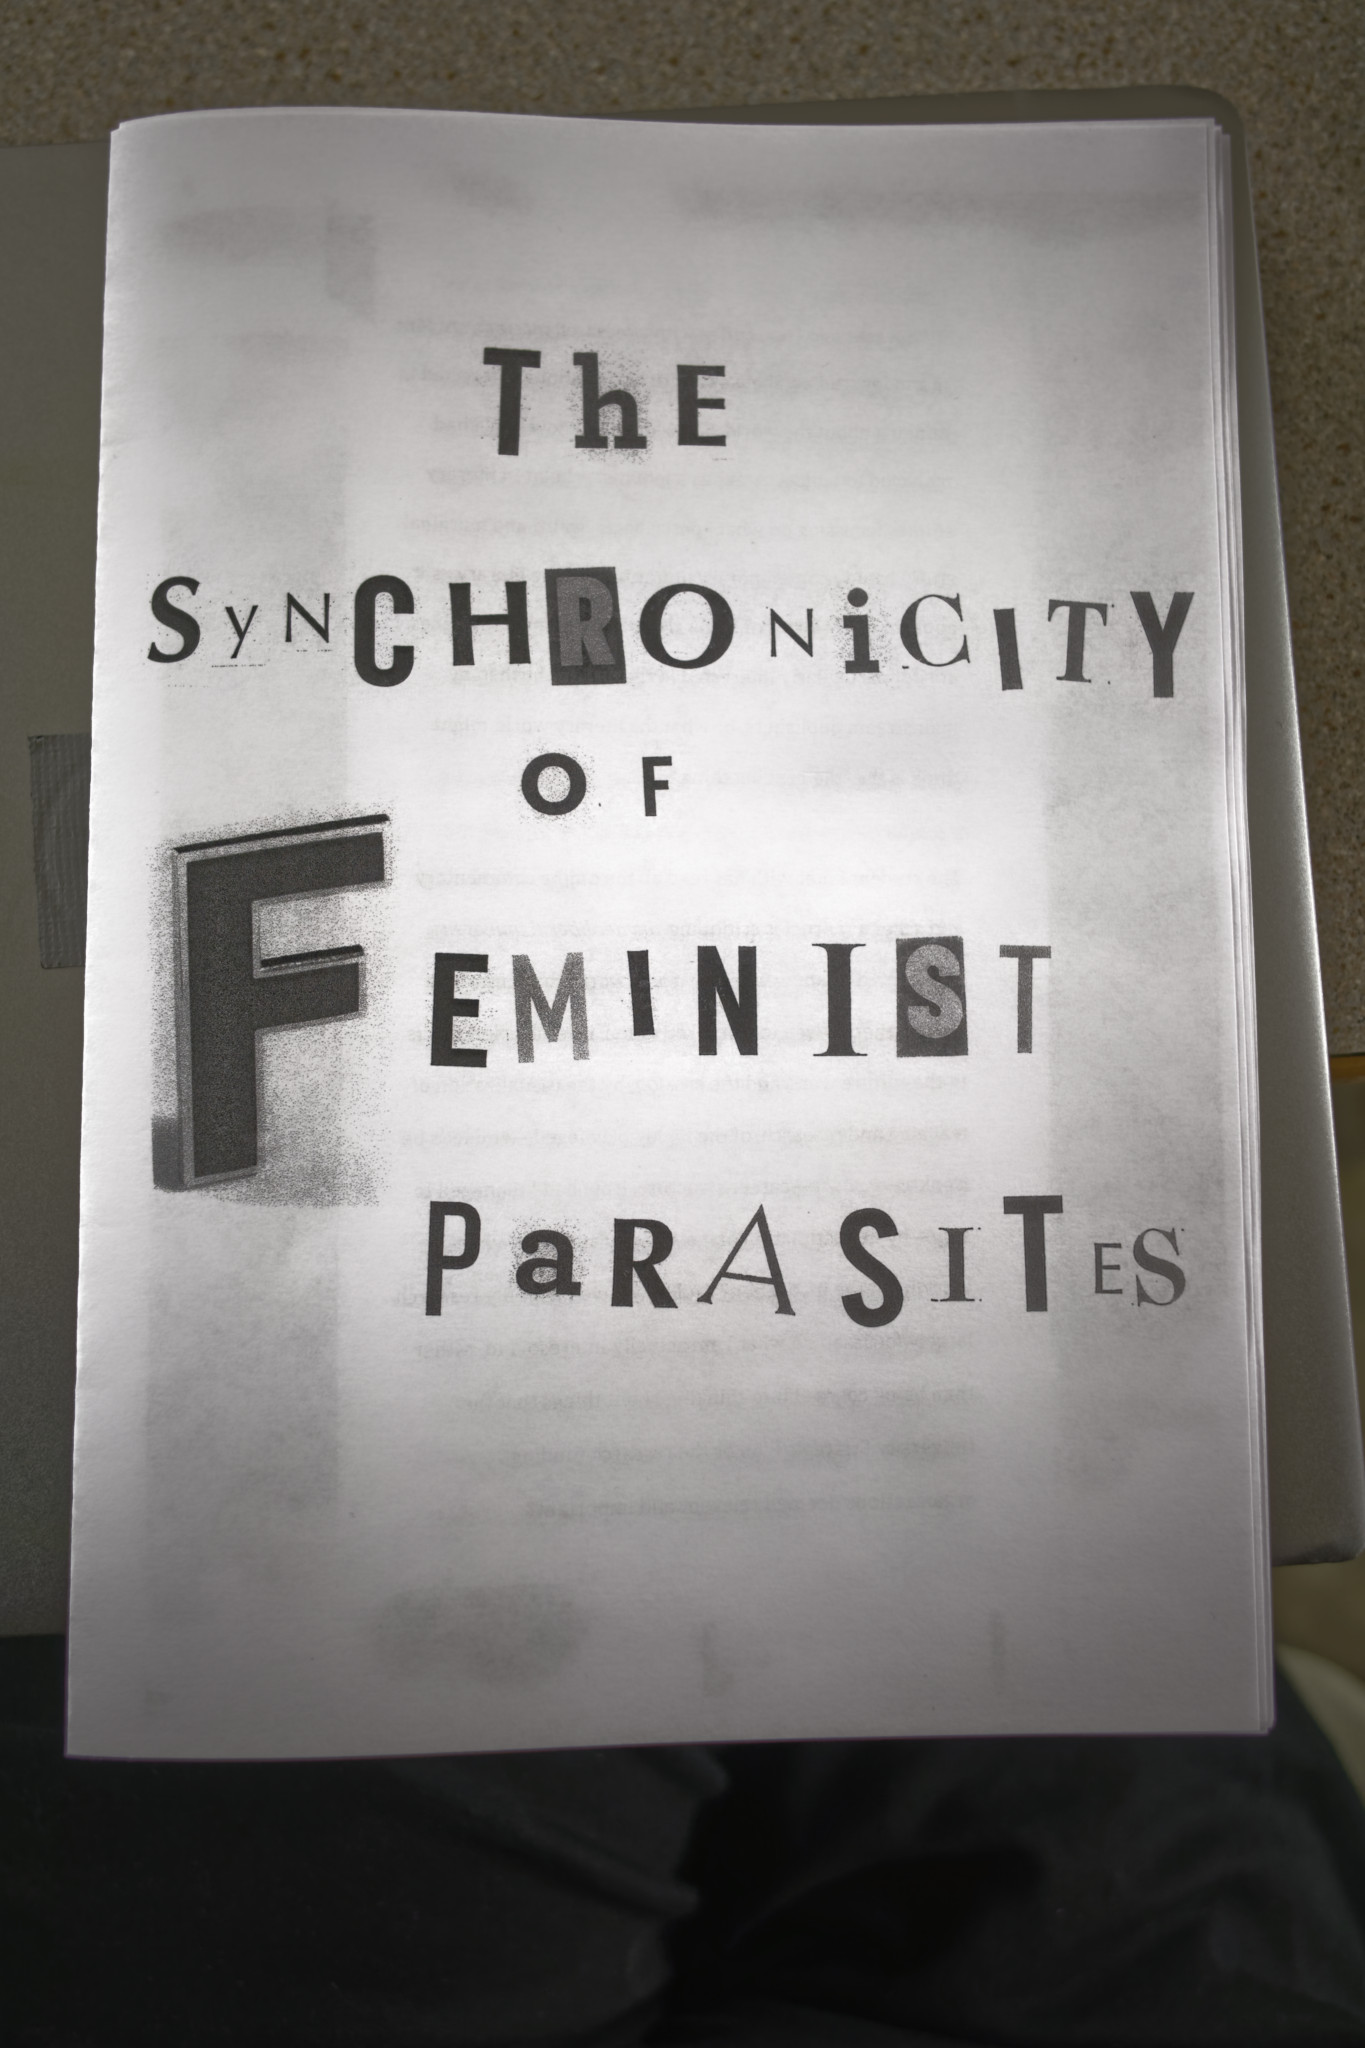 Synchronicity of Feminist Parasites